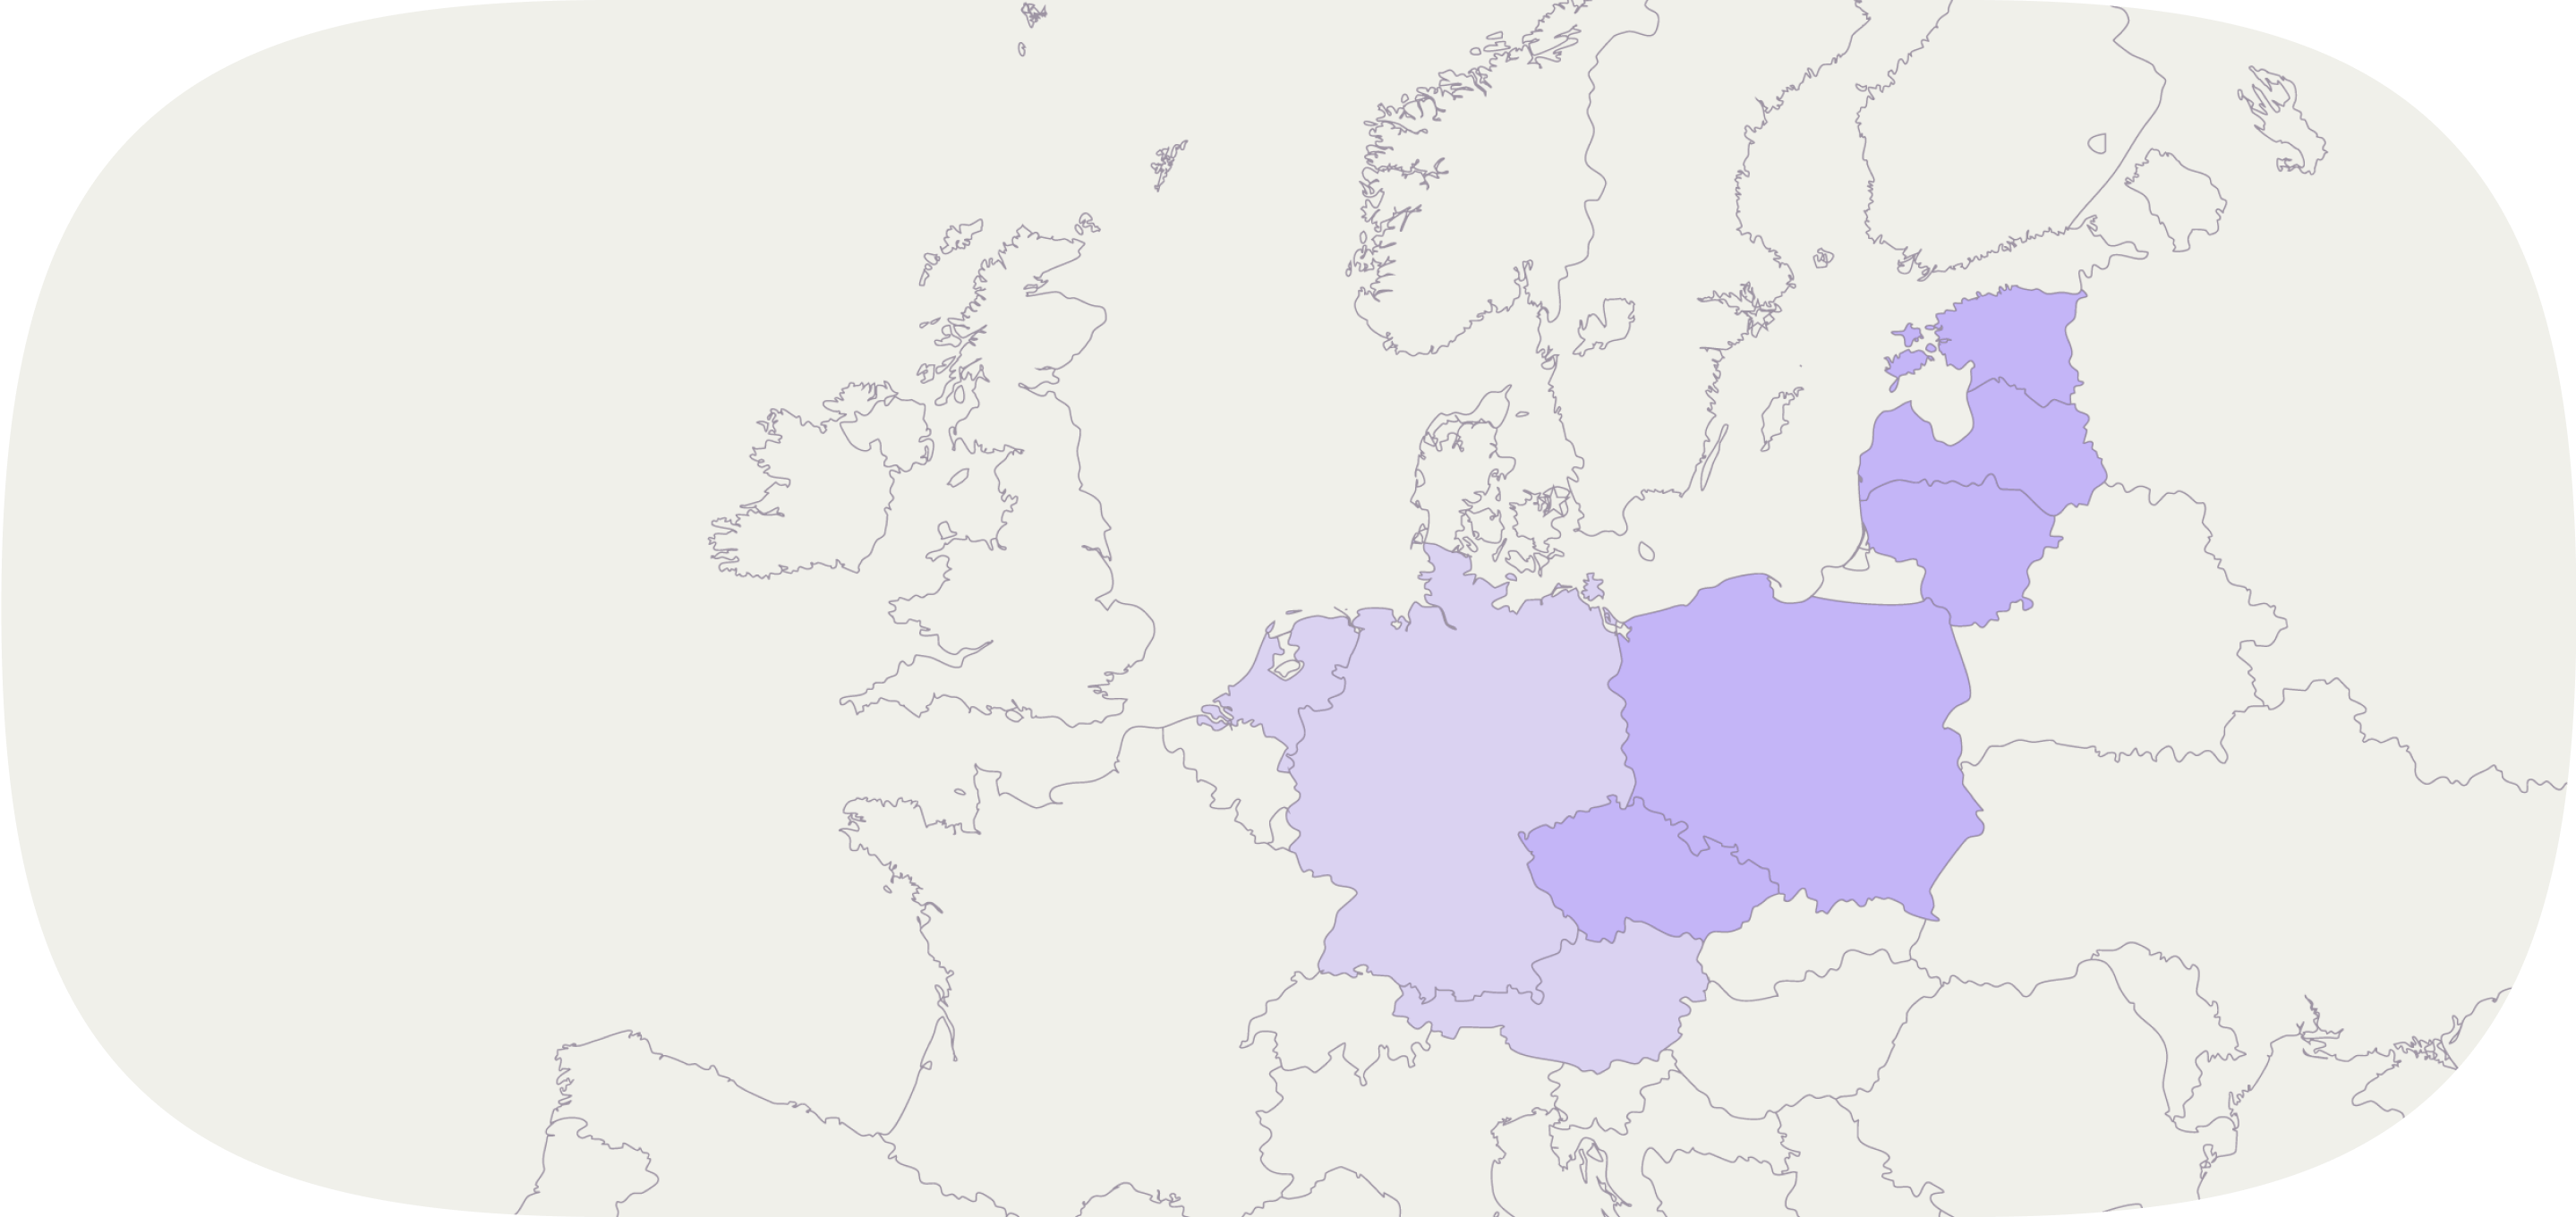 A map of Europe with Estonia, Latvia, Lithuania, Poland, Czechia, Germany, Netherlands, and Austria painted purple